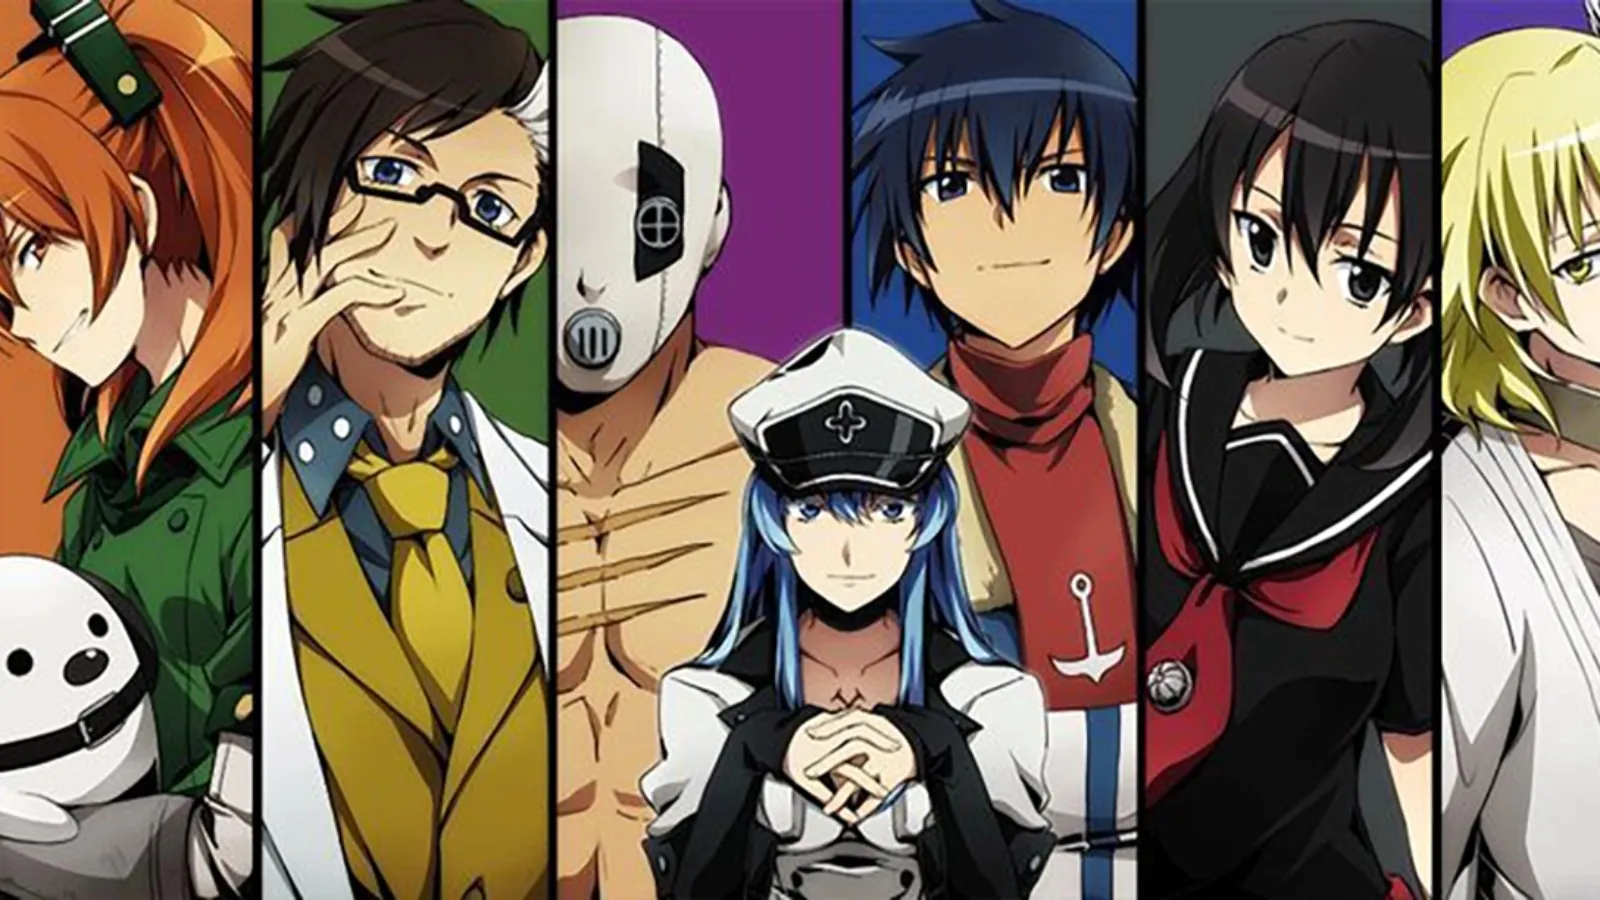 The 10 Best 'Akame ga Kill' Characters, Ranked